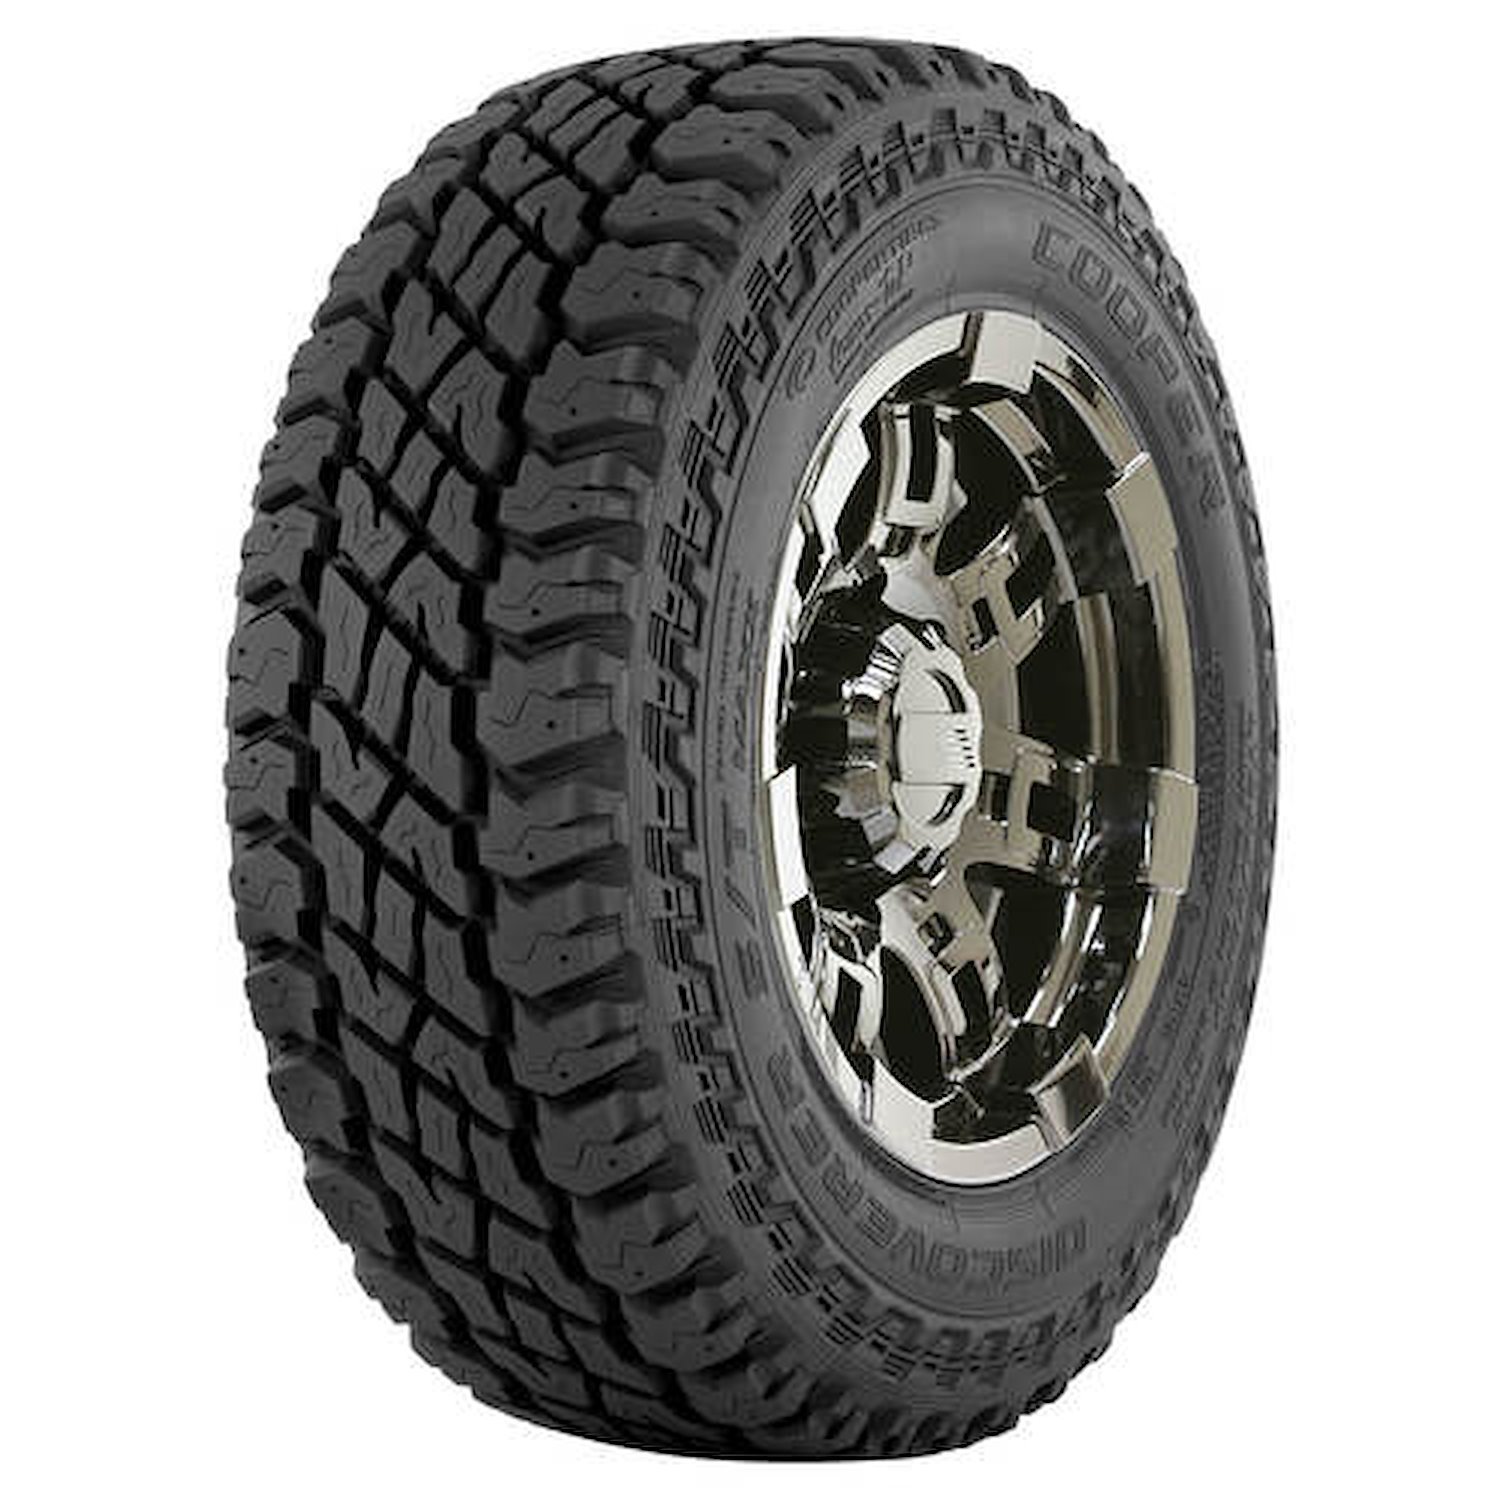 Discoverer S/T Maxx All-Terrain Tire, LT285/75R17